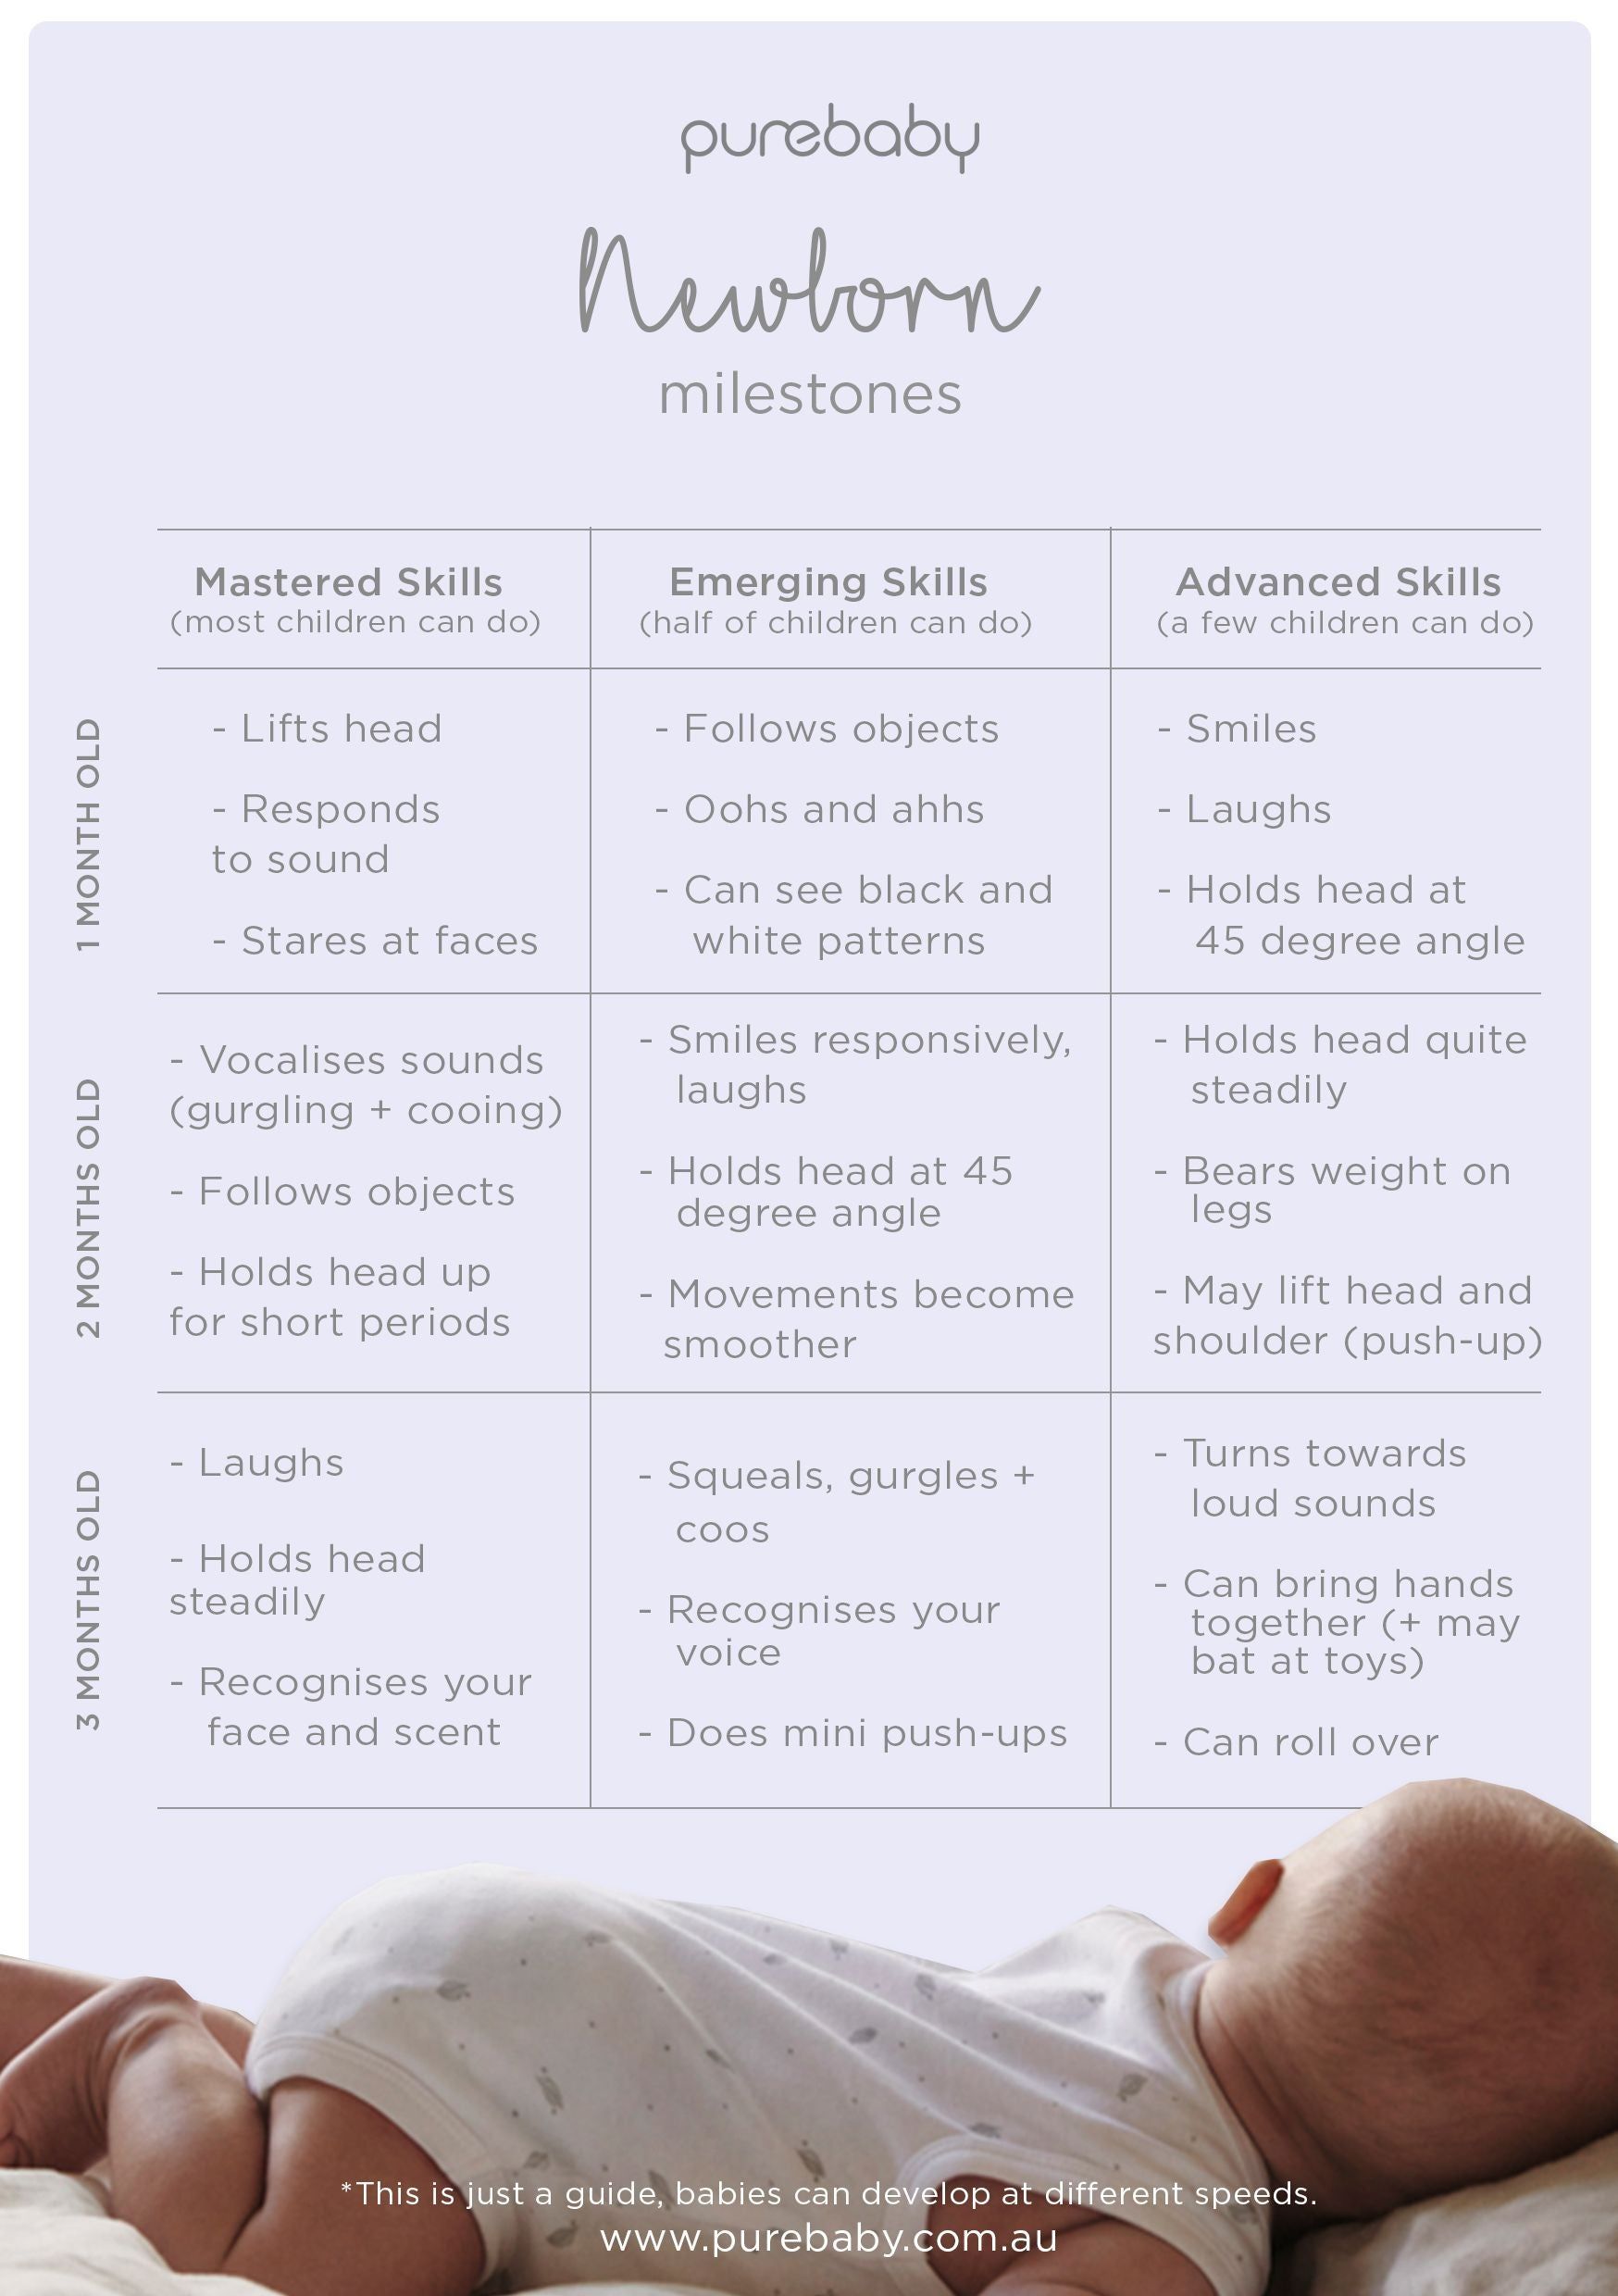 Purebaby table outlining newborn baby milestones